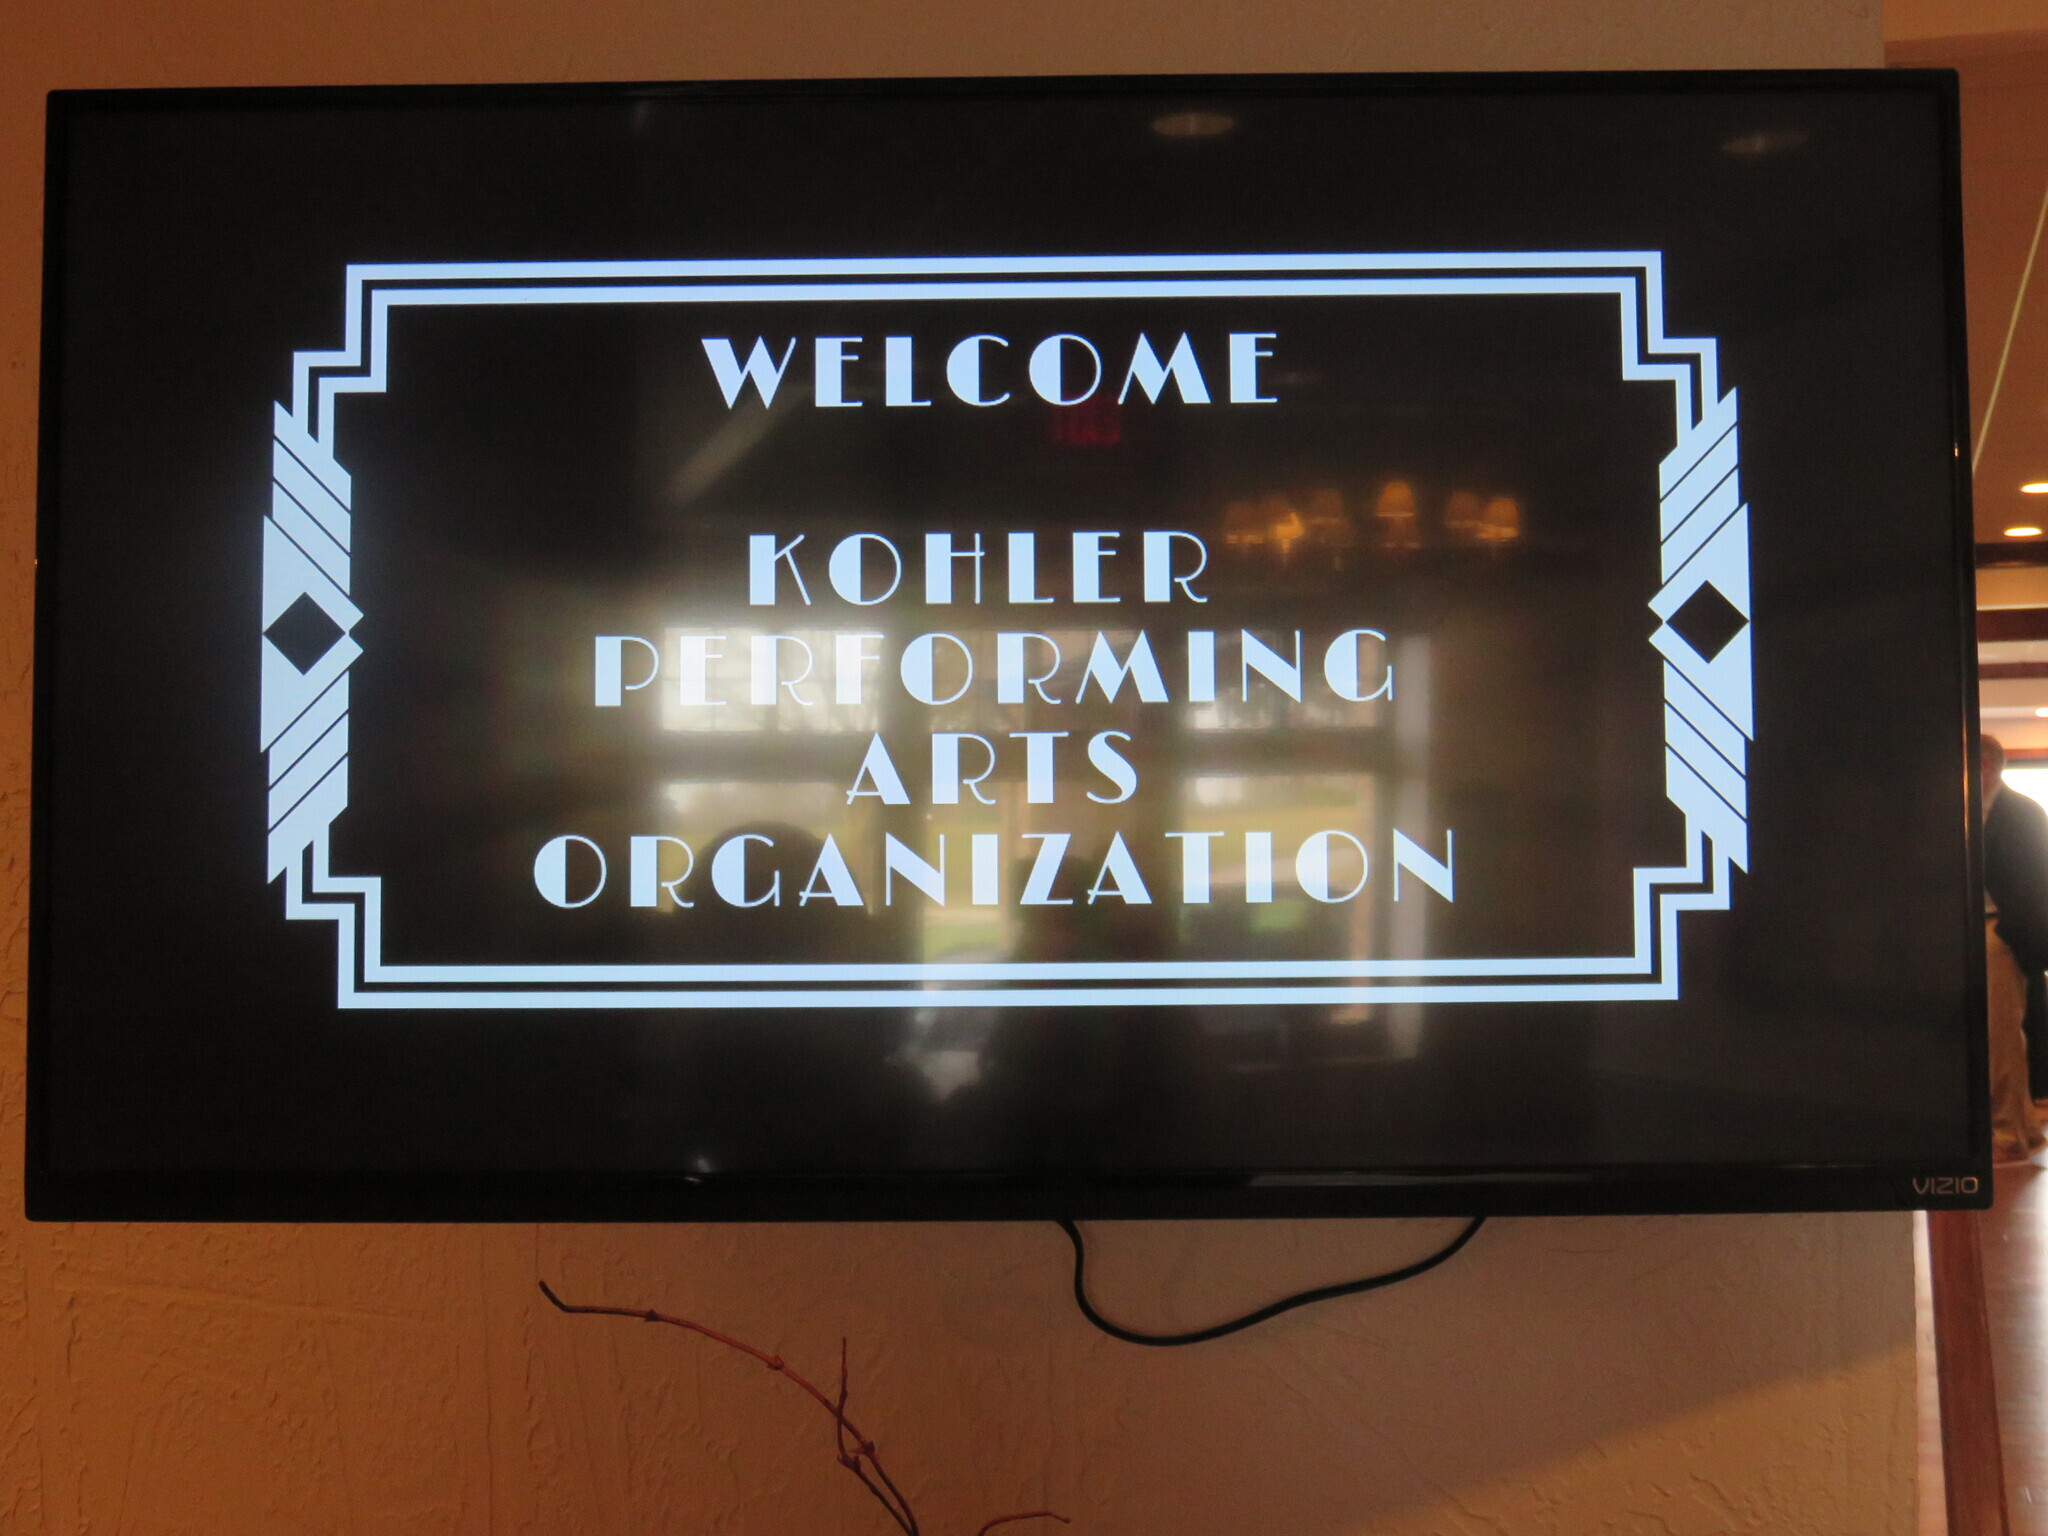 welcome - Kohler performing arts organization